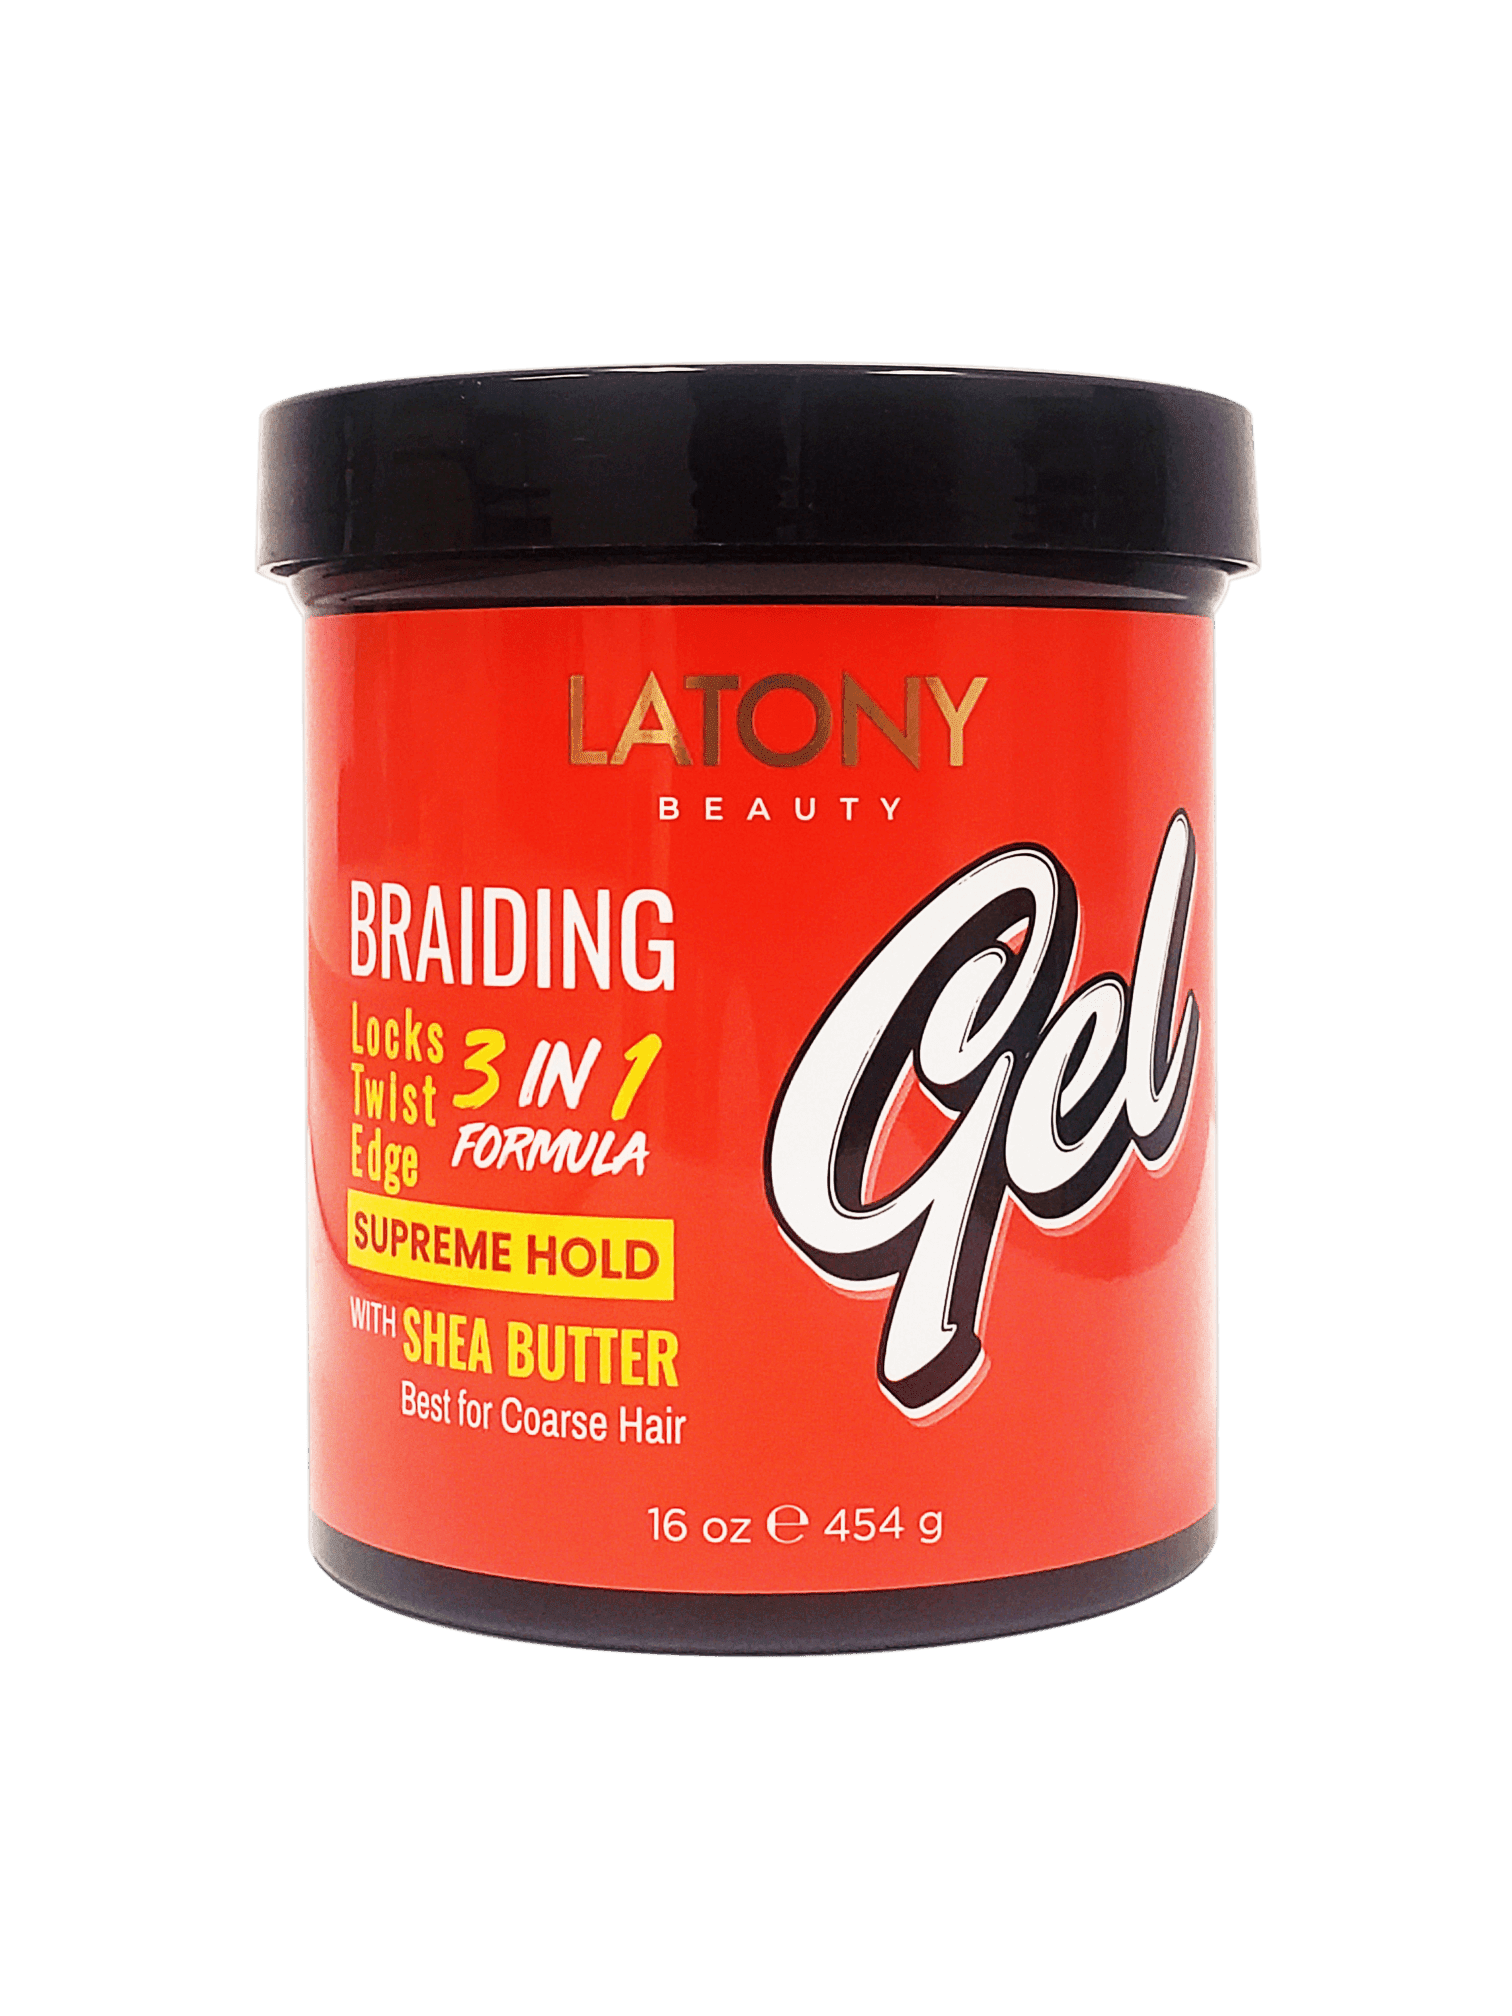 What's the Best Braiding Gel? 